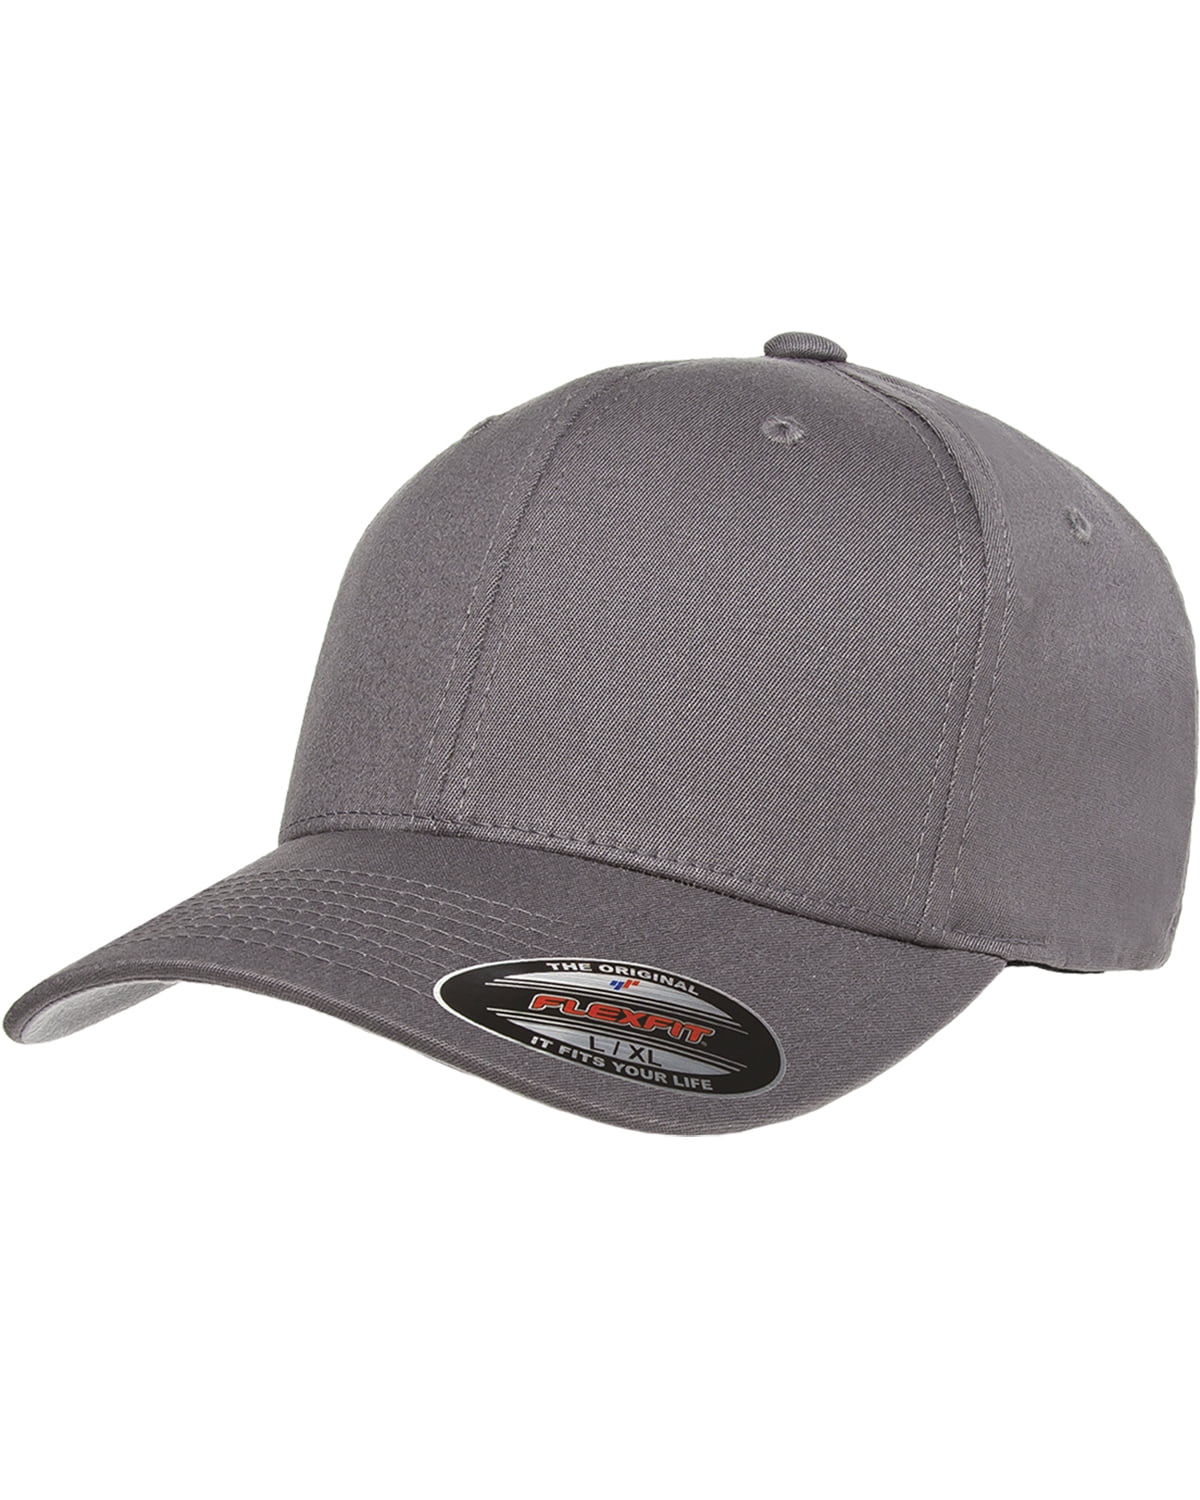 Flex fit Unisex-Adult Cotton Twill Fitted Cap Hat